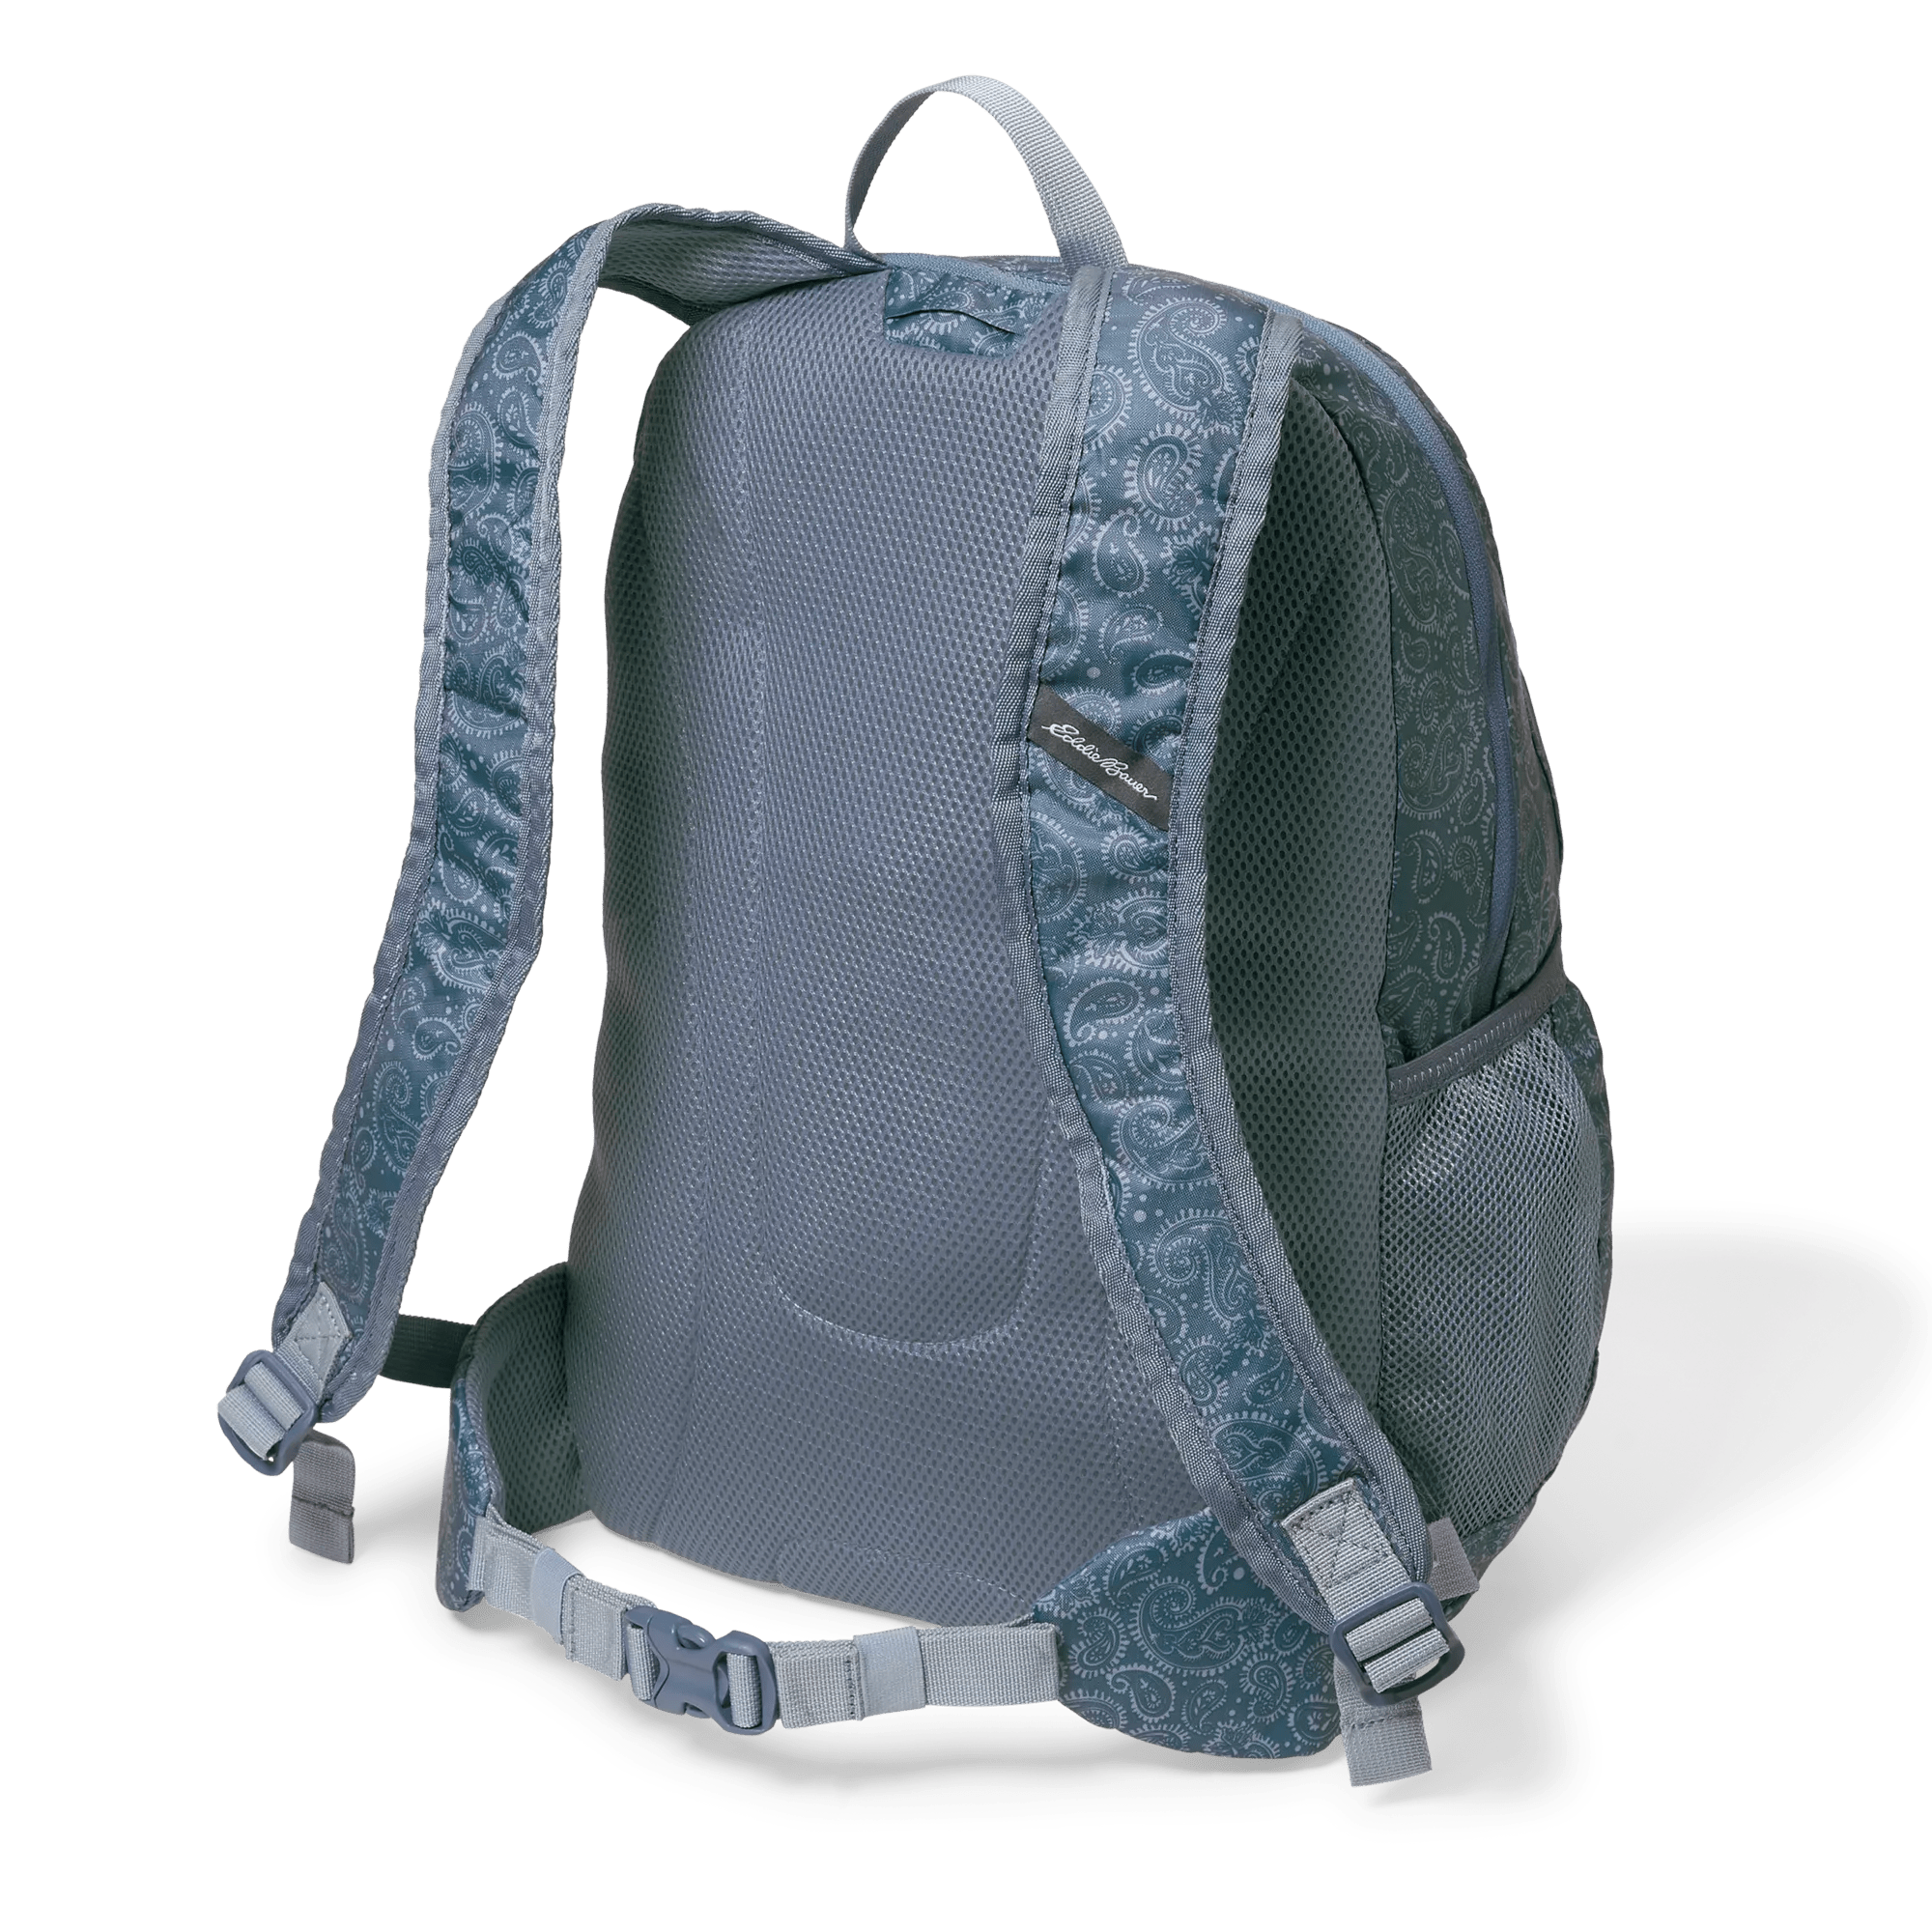 Stowaway Packable 30L Daypack - Plus